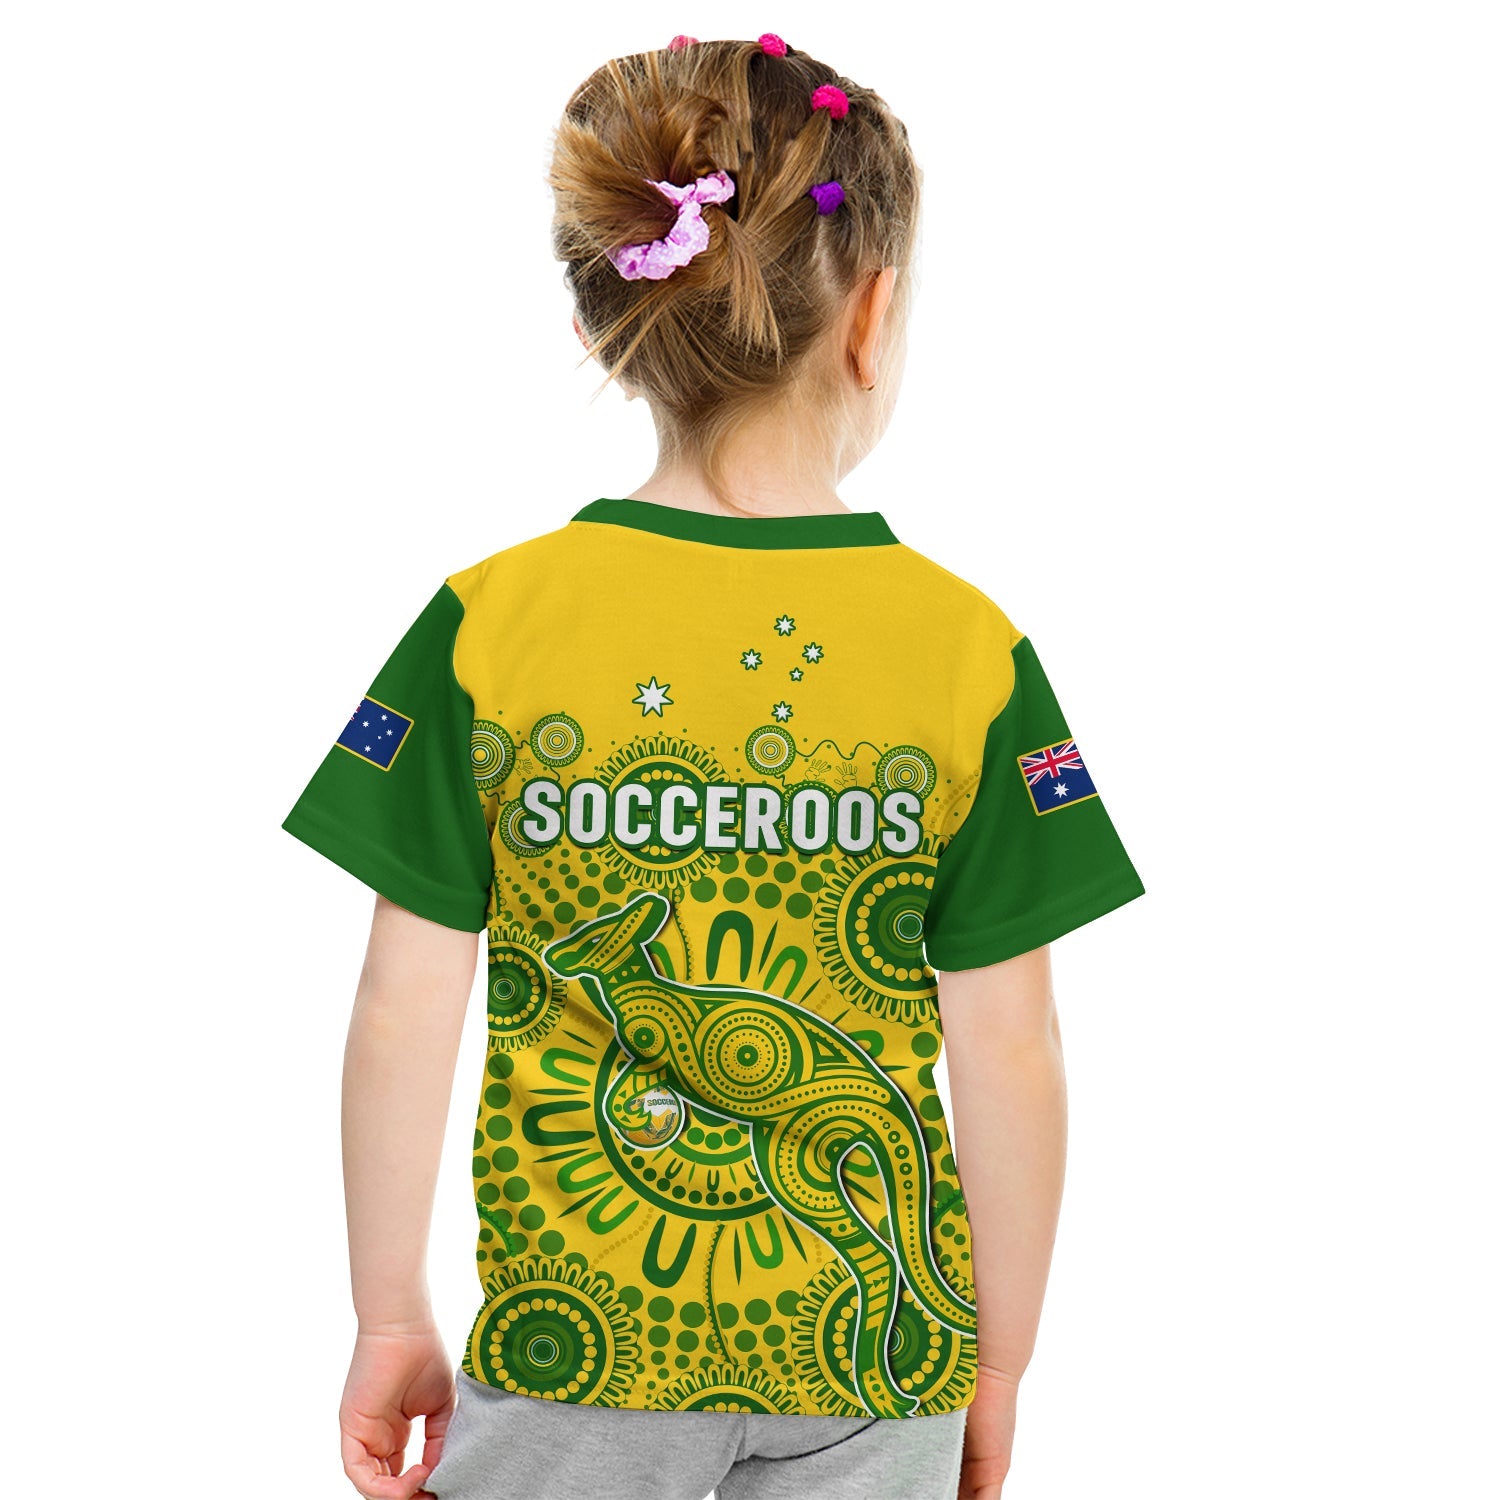 australia-soccer-t-shirt-socceroos-kangaroo-aussie-indigenous-national-color